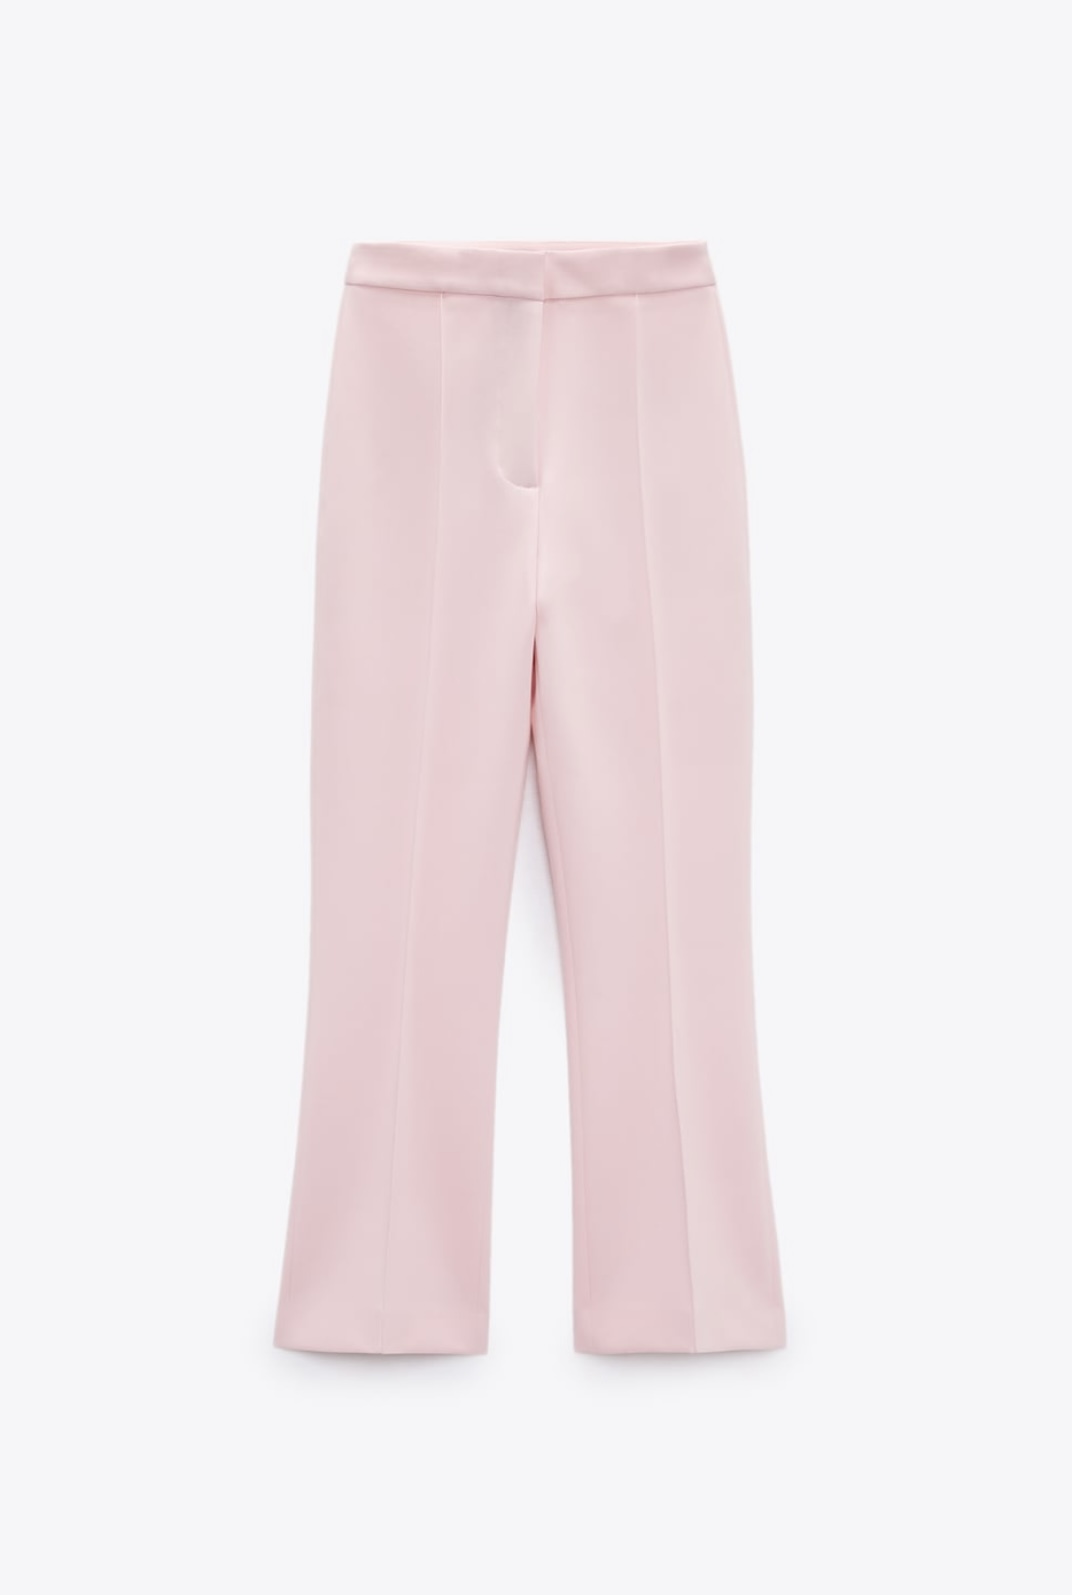 Pantalón traje rosa de Zara